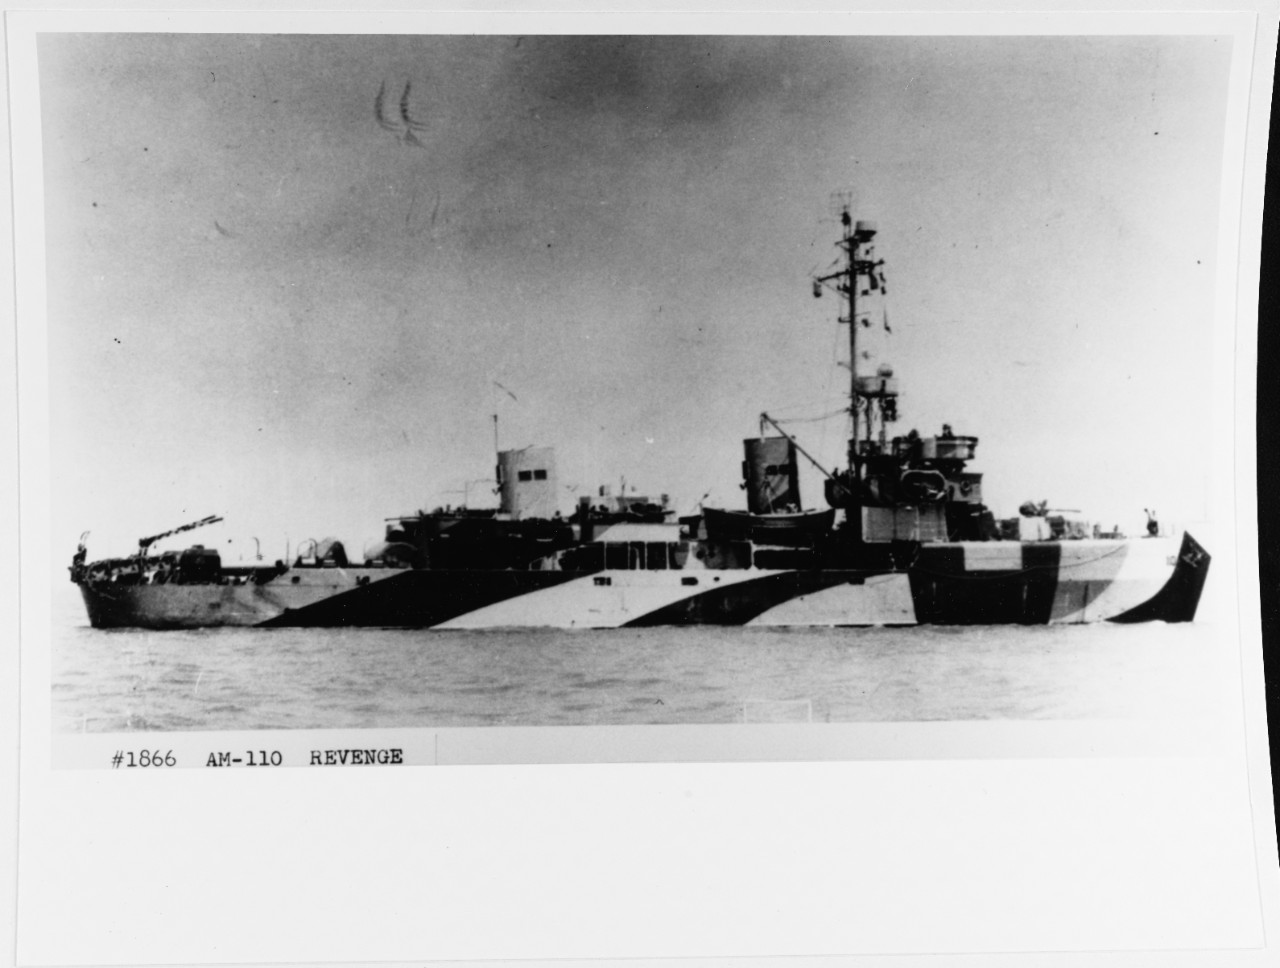 USS REVENGE (AM-110)